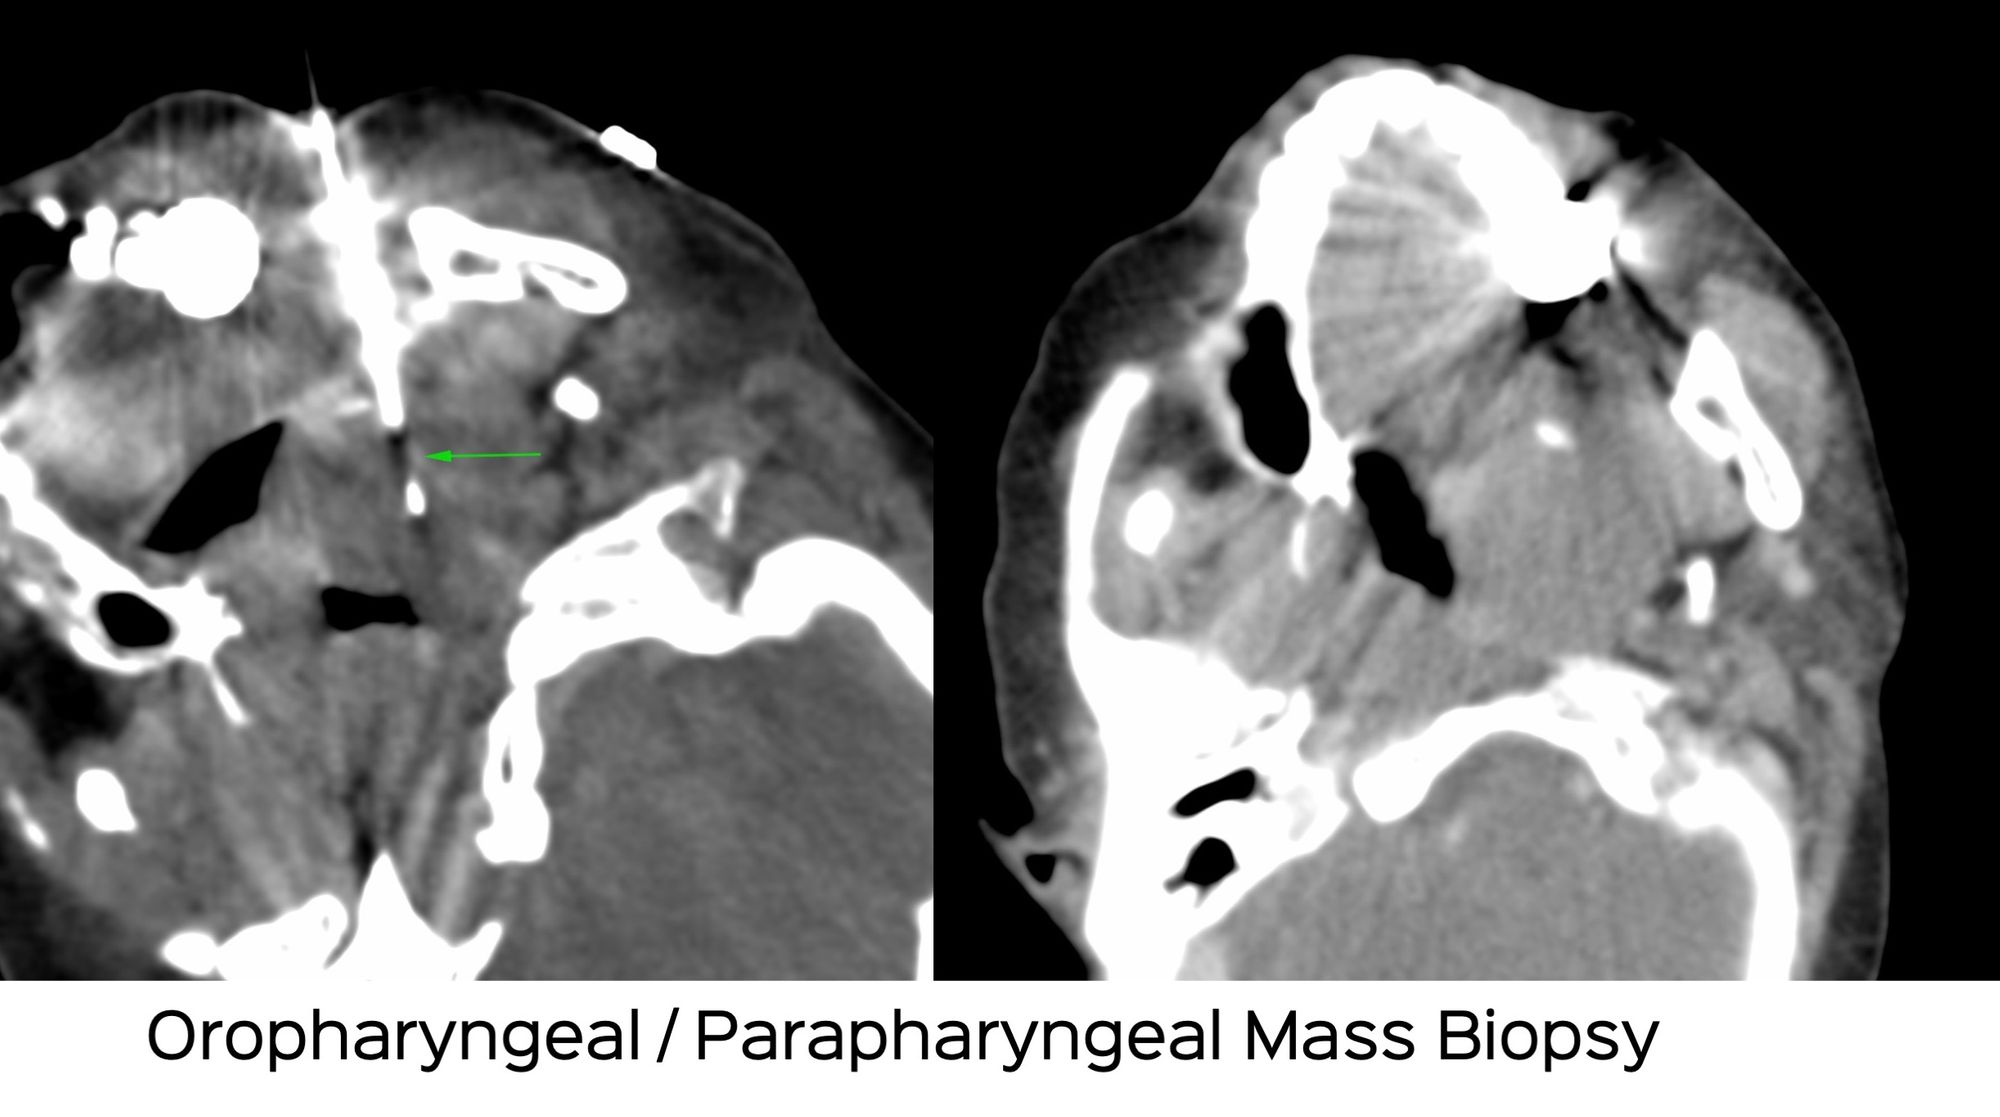 Case 24: Oropharyngeal / Parapharyngeal Mass Biopsy